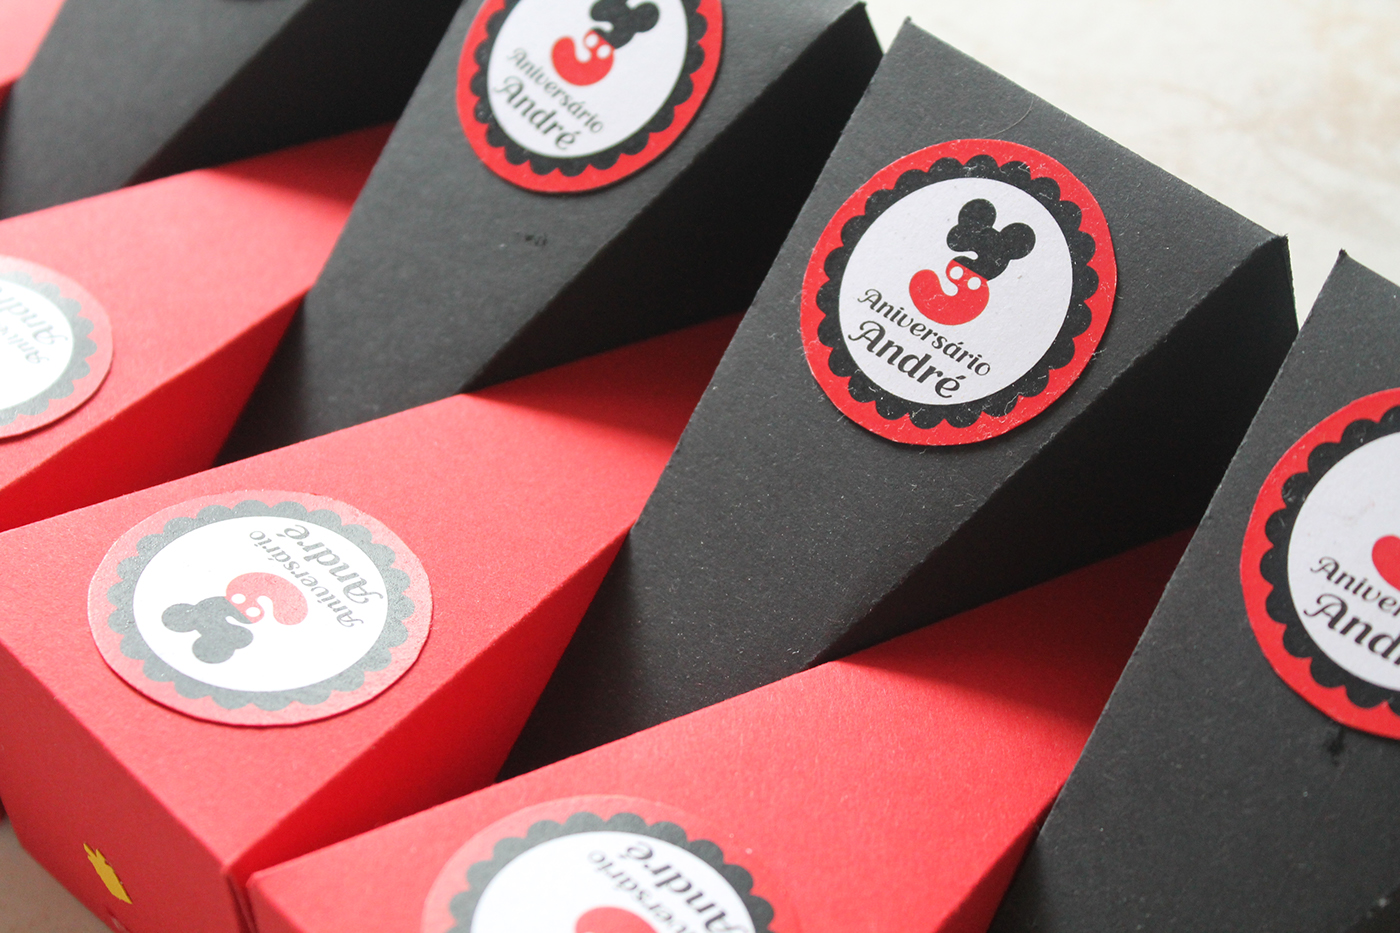 mickey mouse party aniversário anniversary embalagens Packaging handmade feito a mão rato mickey